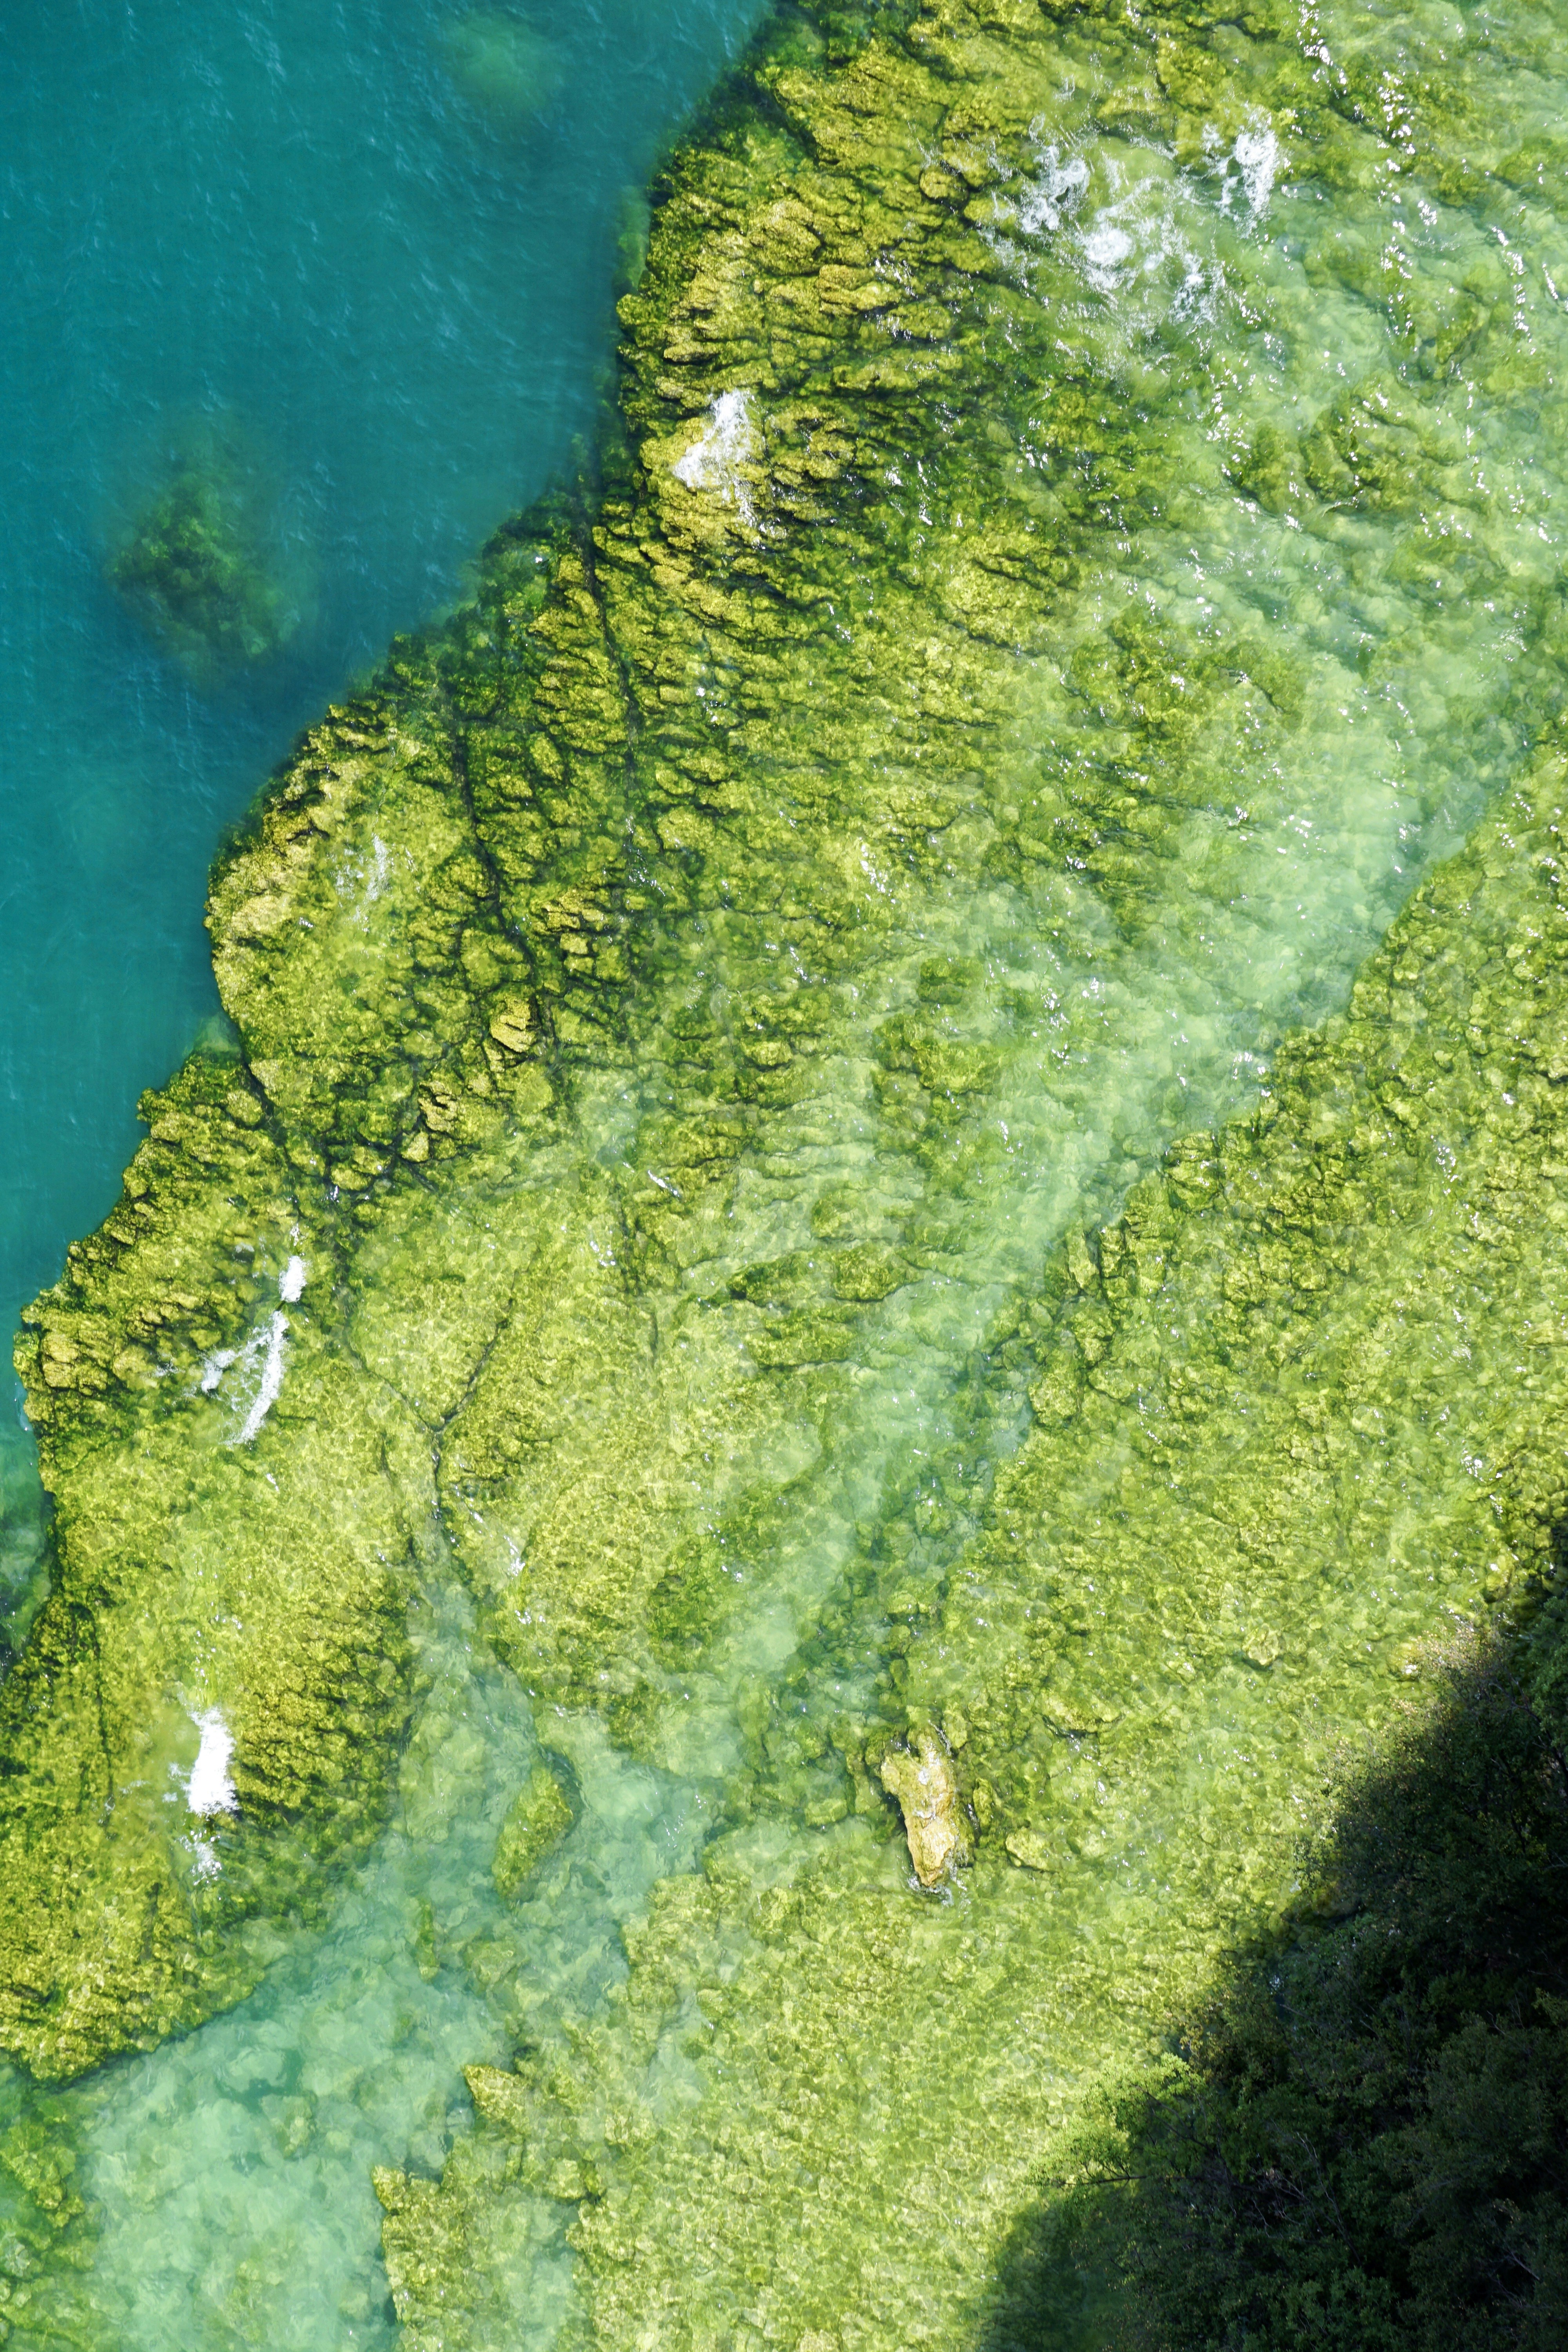 Stoneformation in water at Lake Garda, Italy